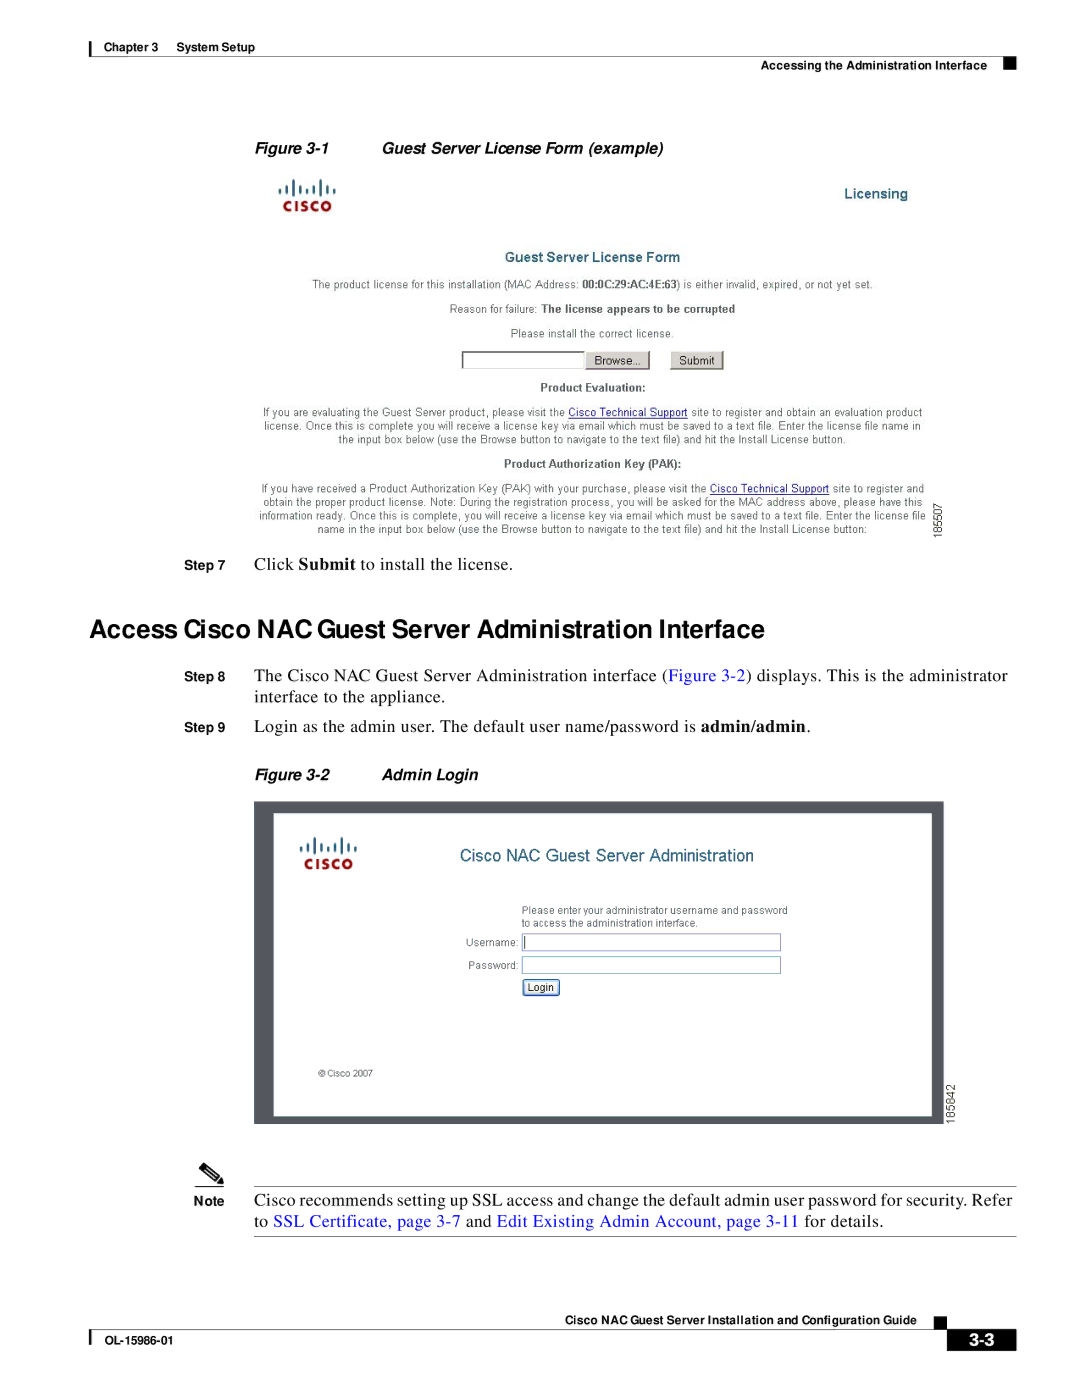 Cisco Systems OL-15986-01 manual Access Cisco NAC Guest Server Administration Interface, Admin Login 